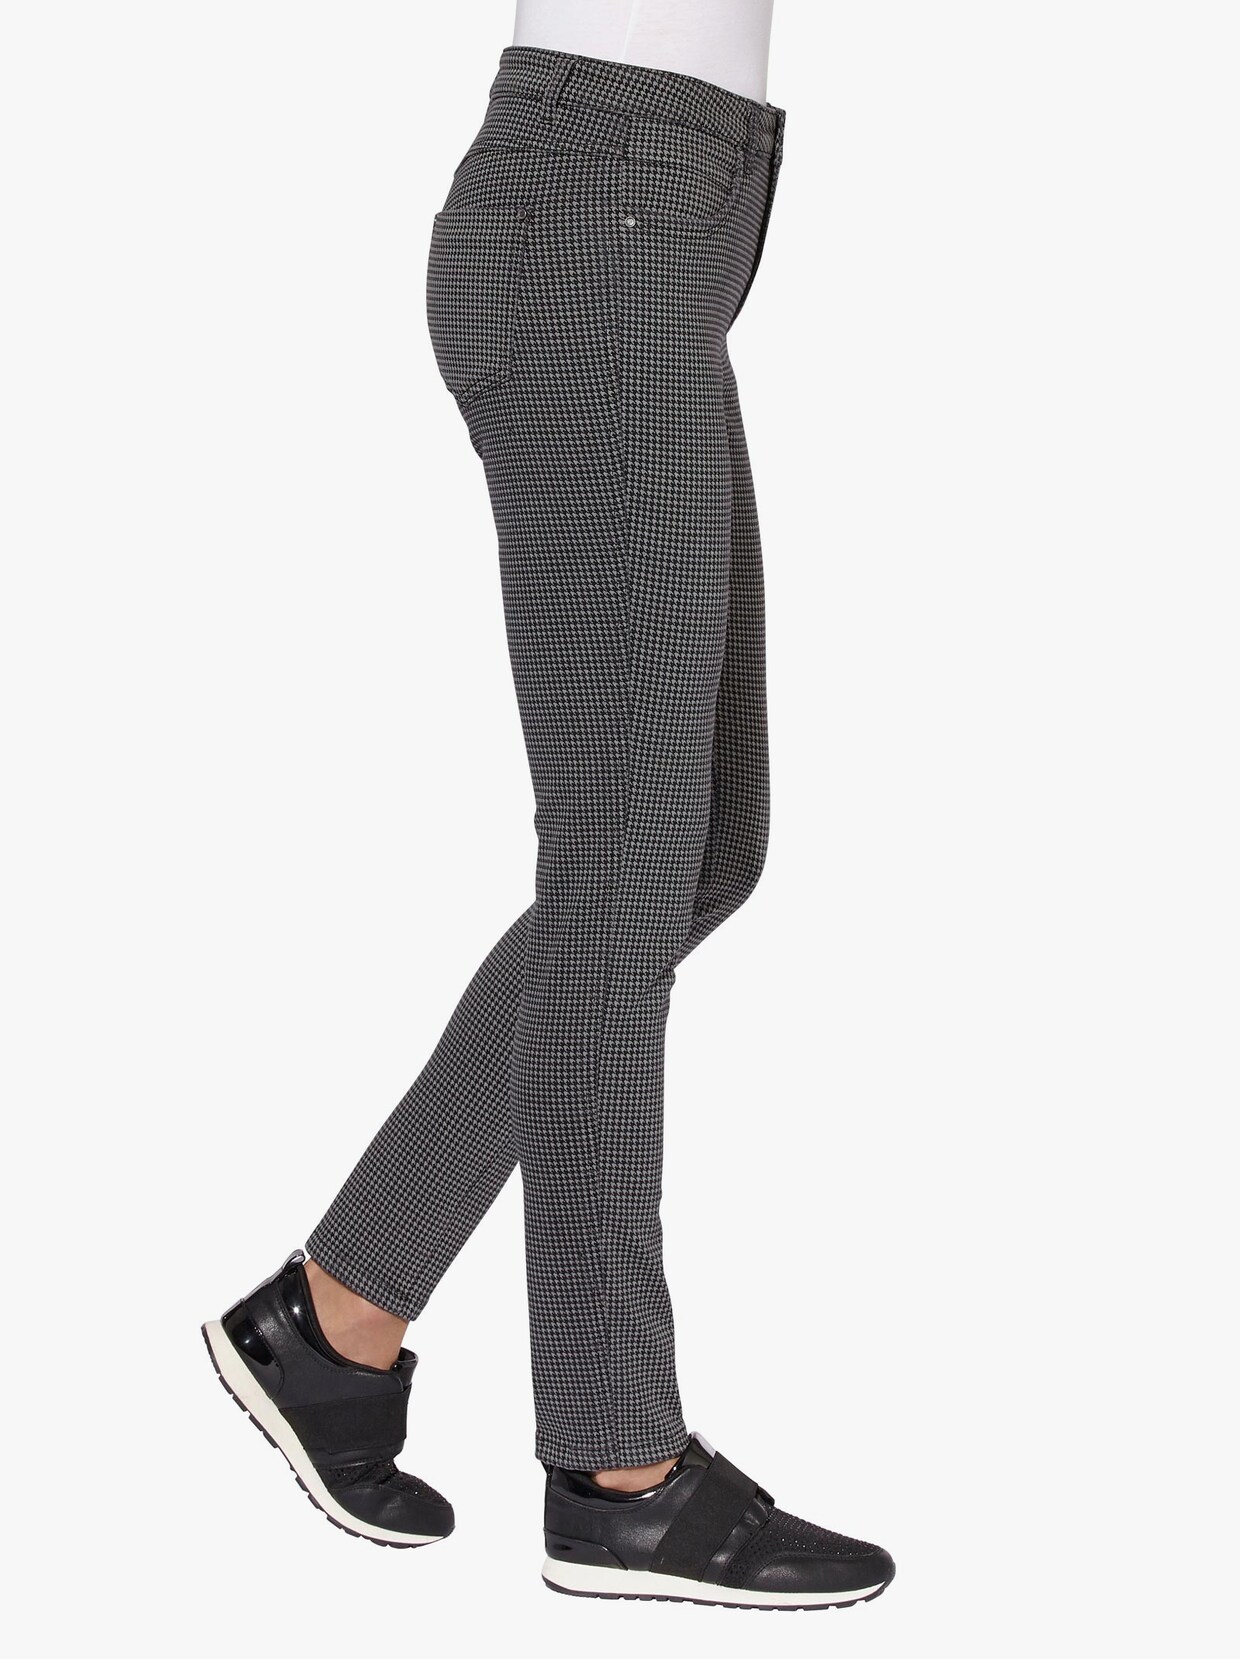 Jeans - grau-schwarz-bedruckt